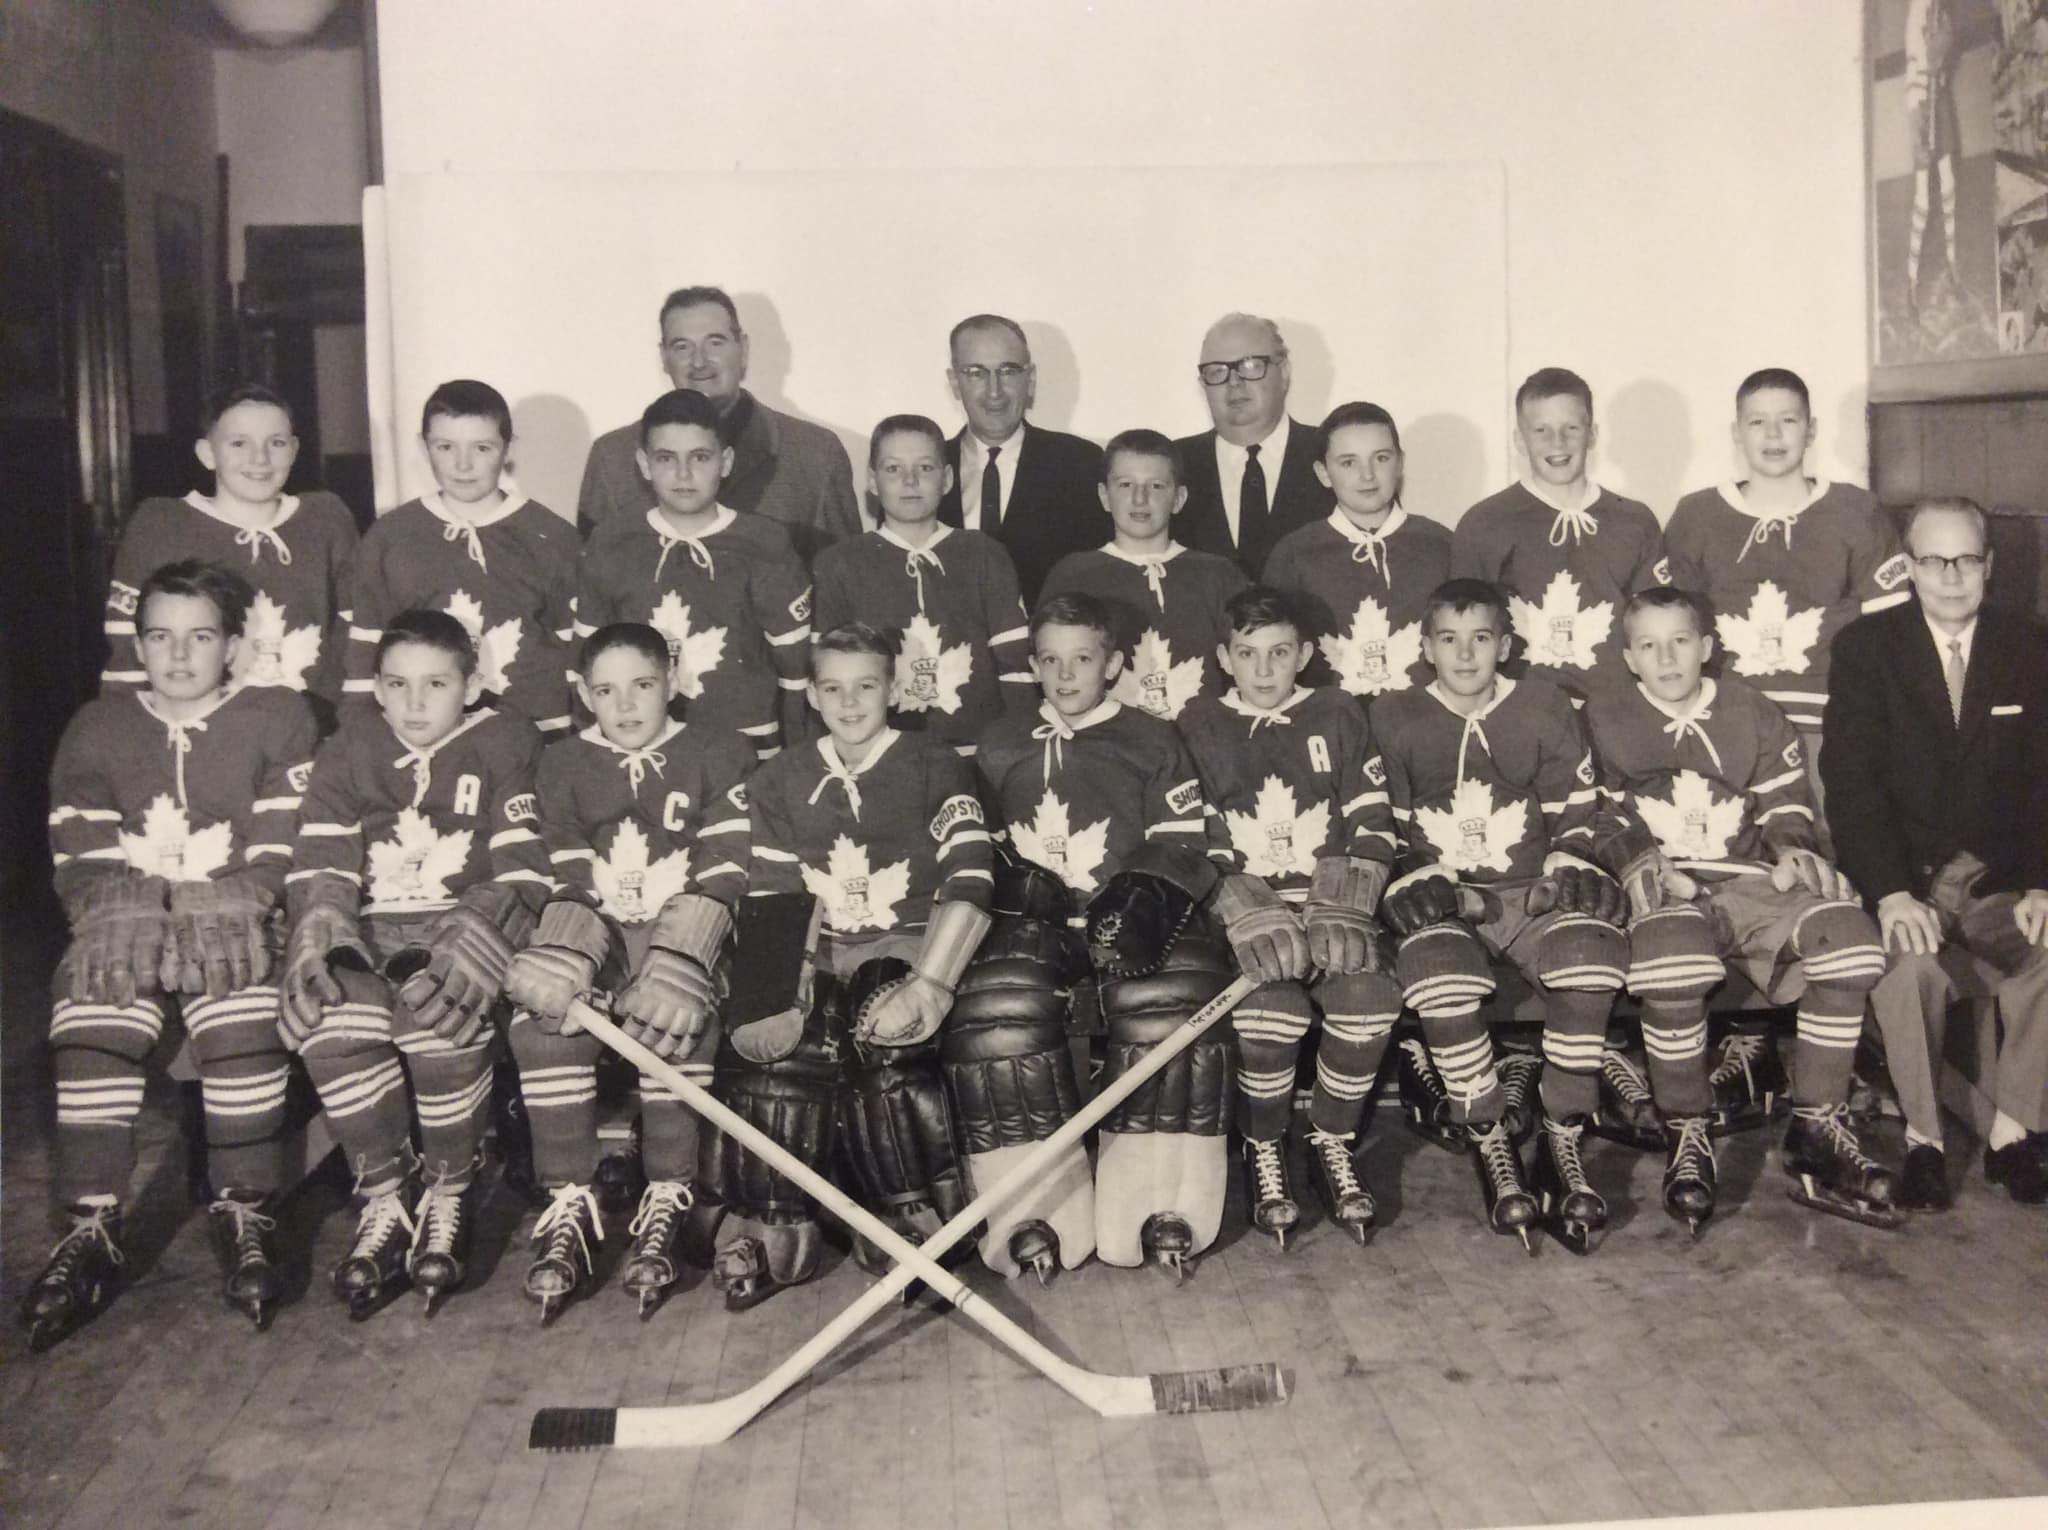 Toronto Marlboros Shopsys Pee Wee team. Mr. Sam Shopsowitz back row right. Photo taken in Maple Leaf Gardens, NHL Visitors dressing room. 1960